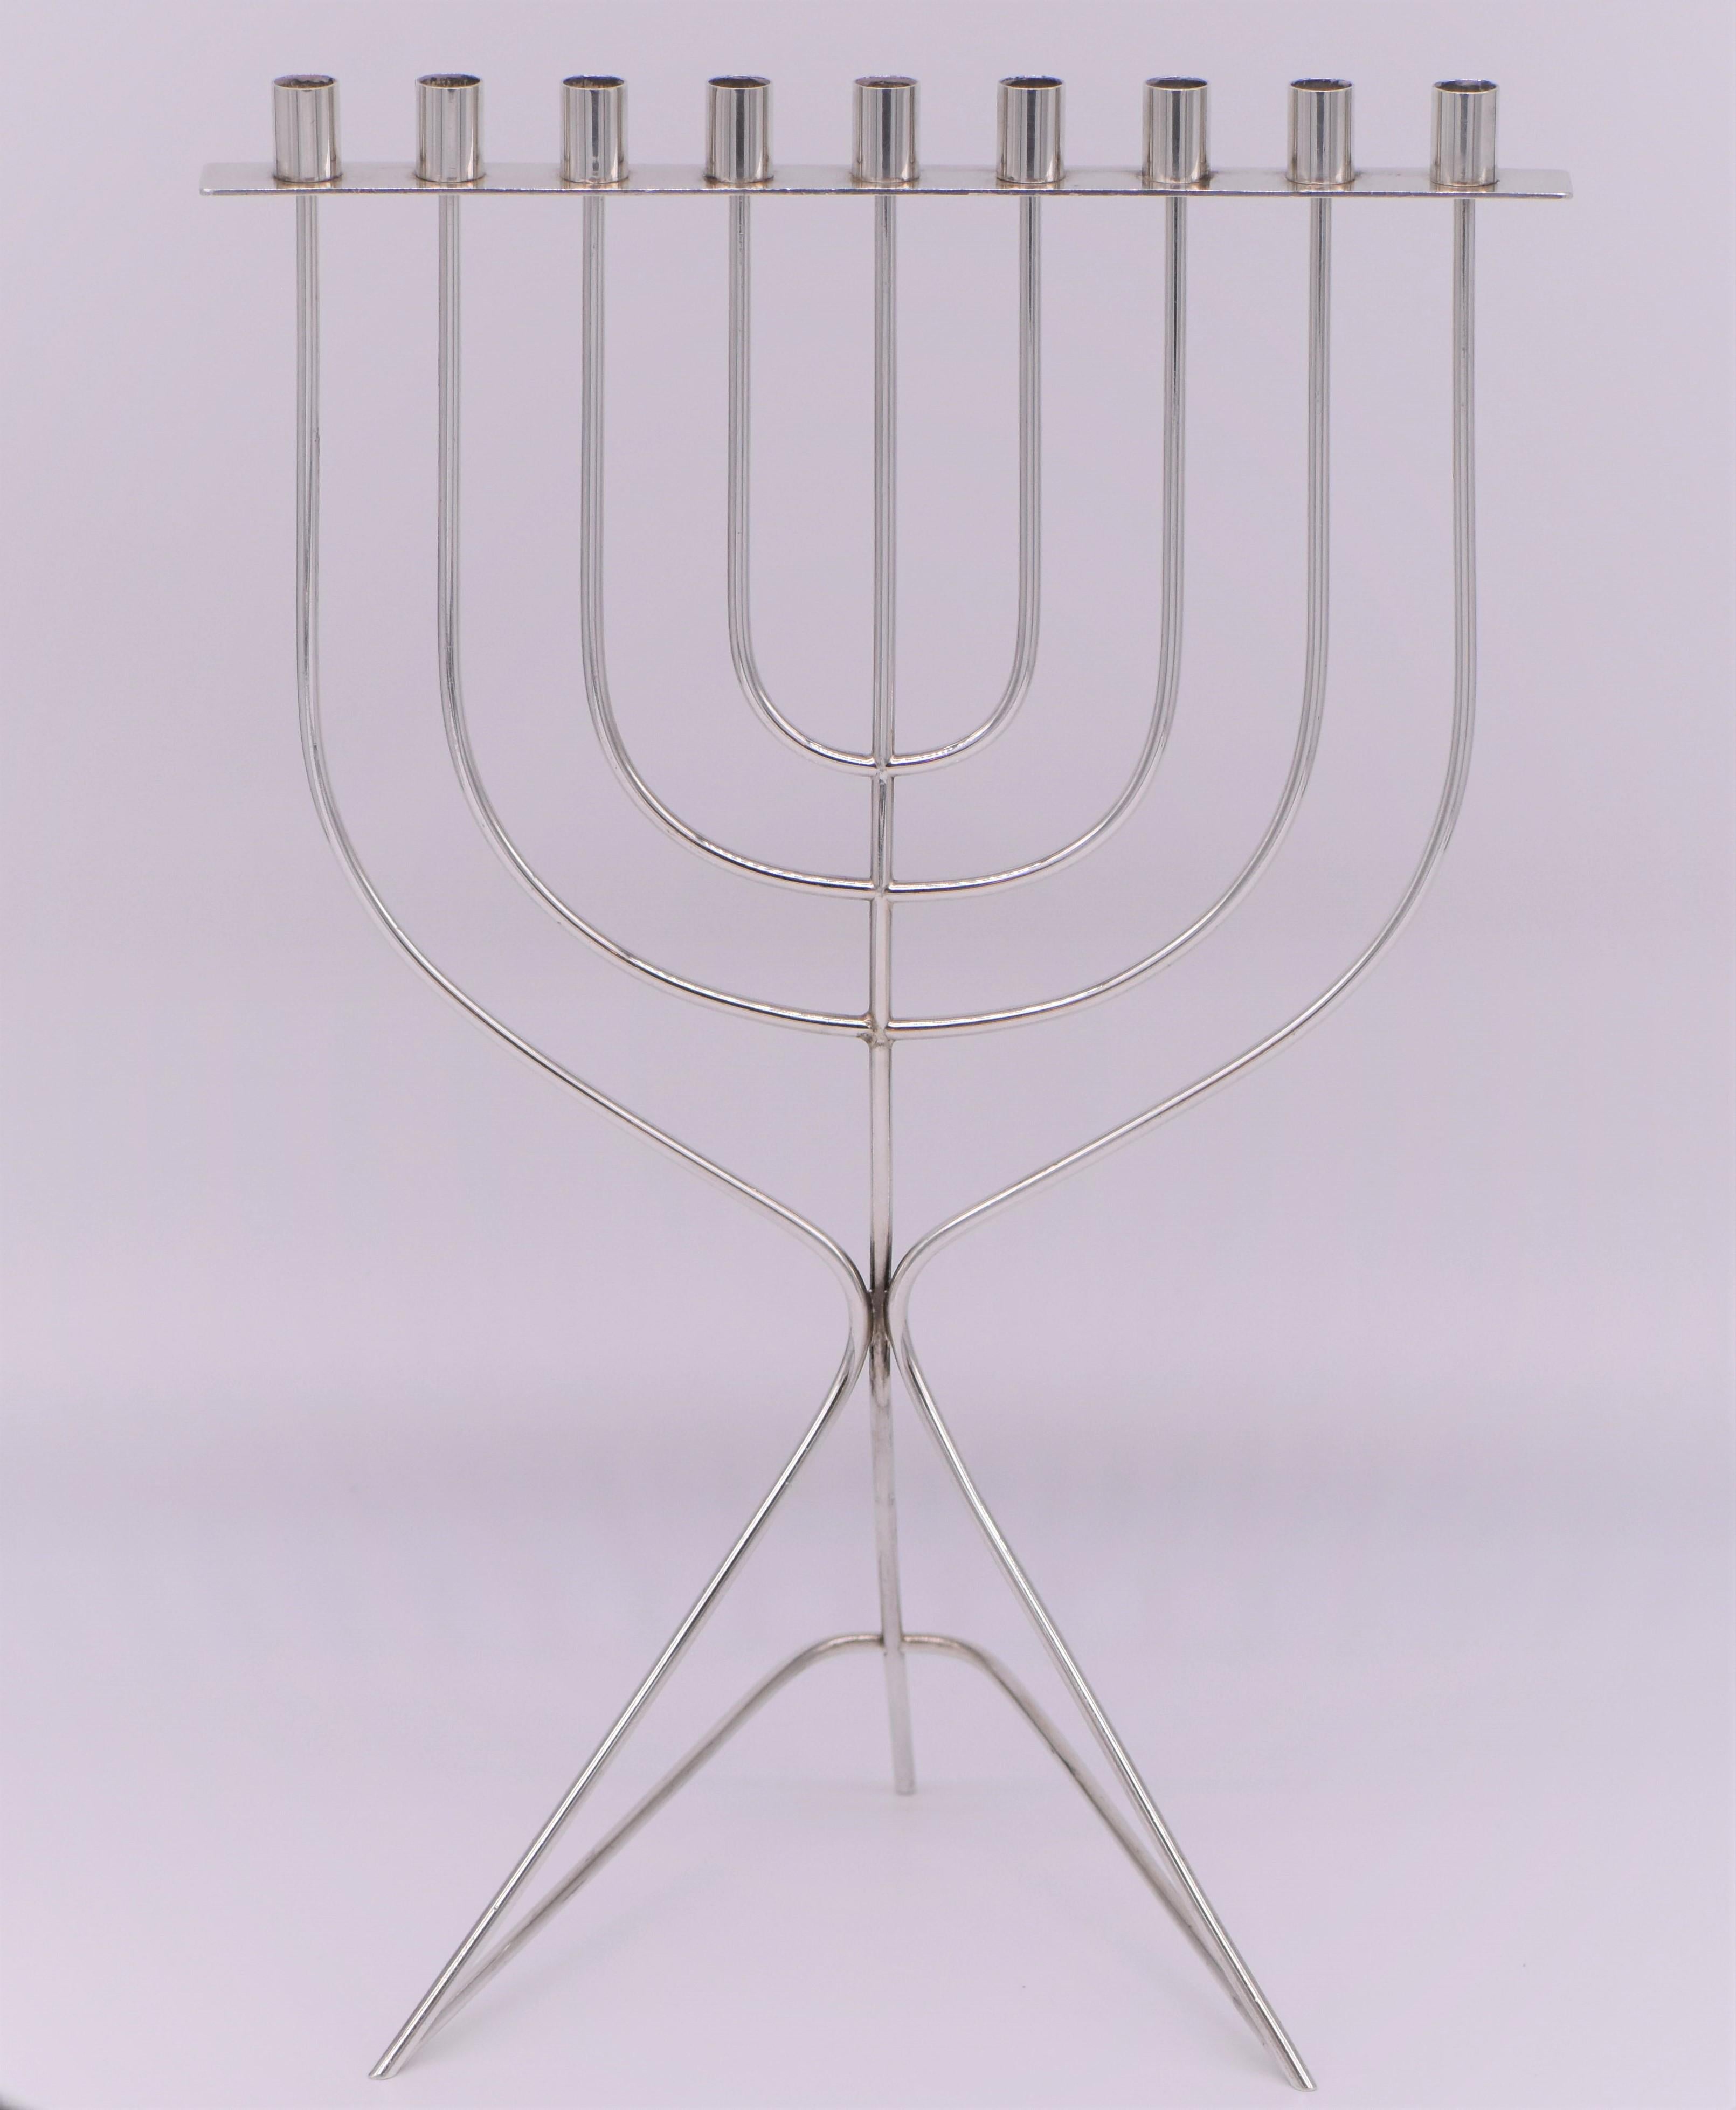 Hanukkah lamp created by David Heinz Gumbel, Israel, circa 1960.
Sterling silver, bent. Signed: 